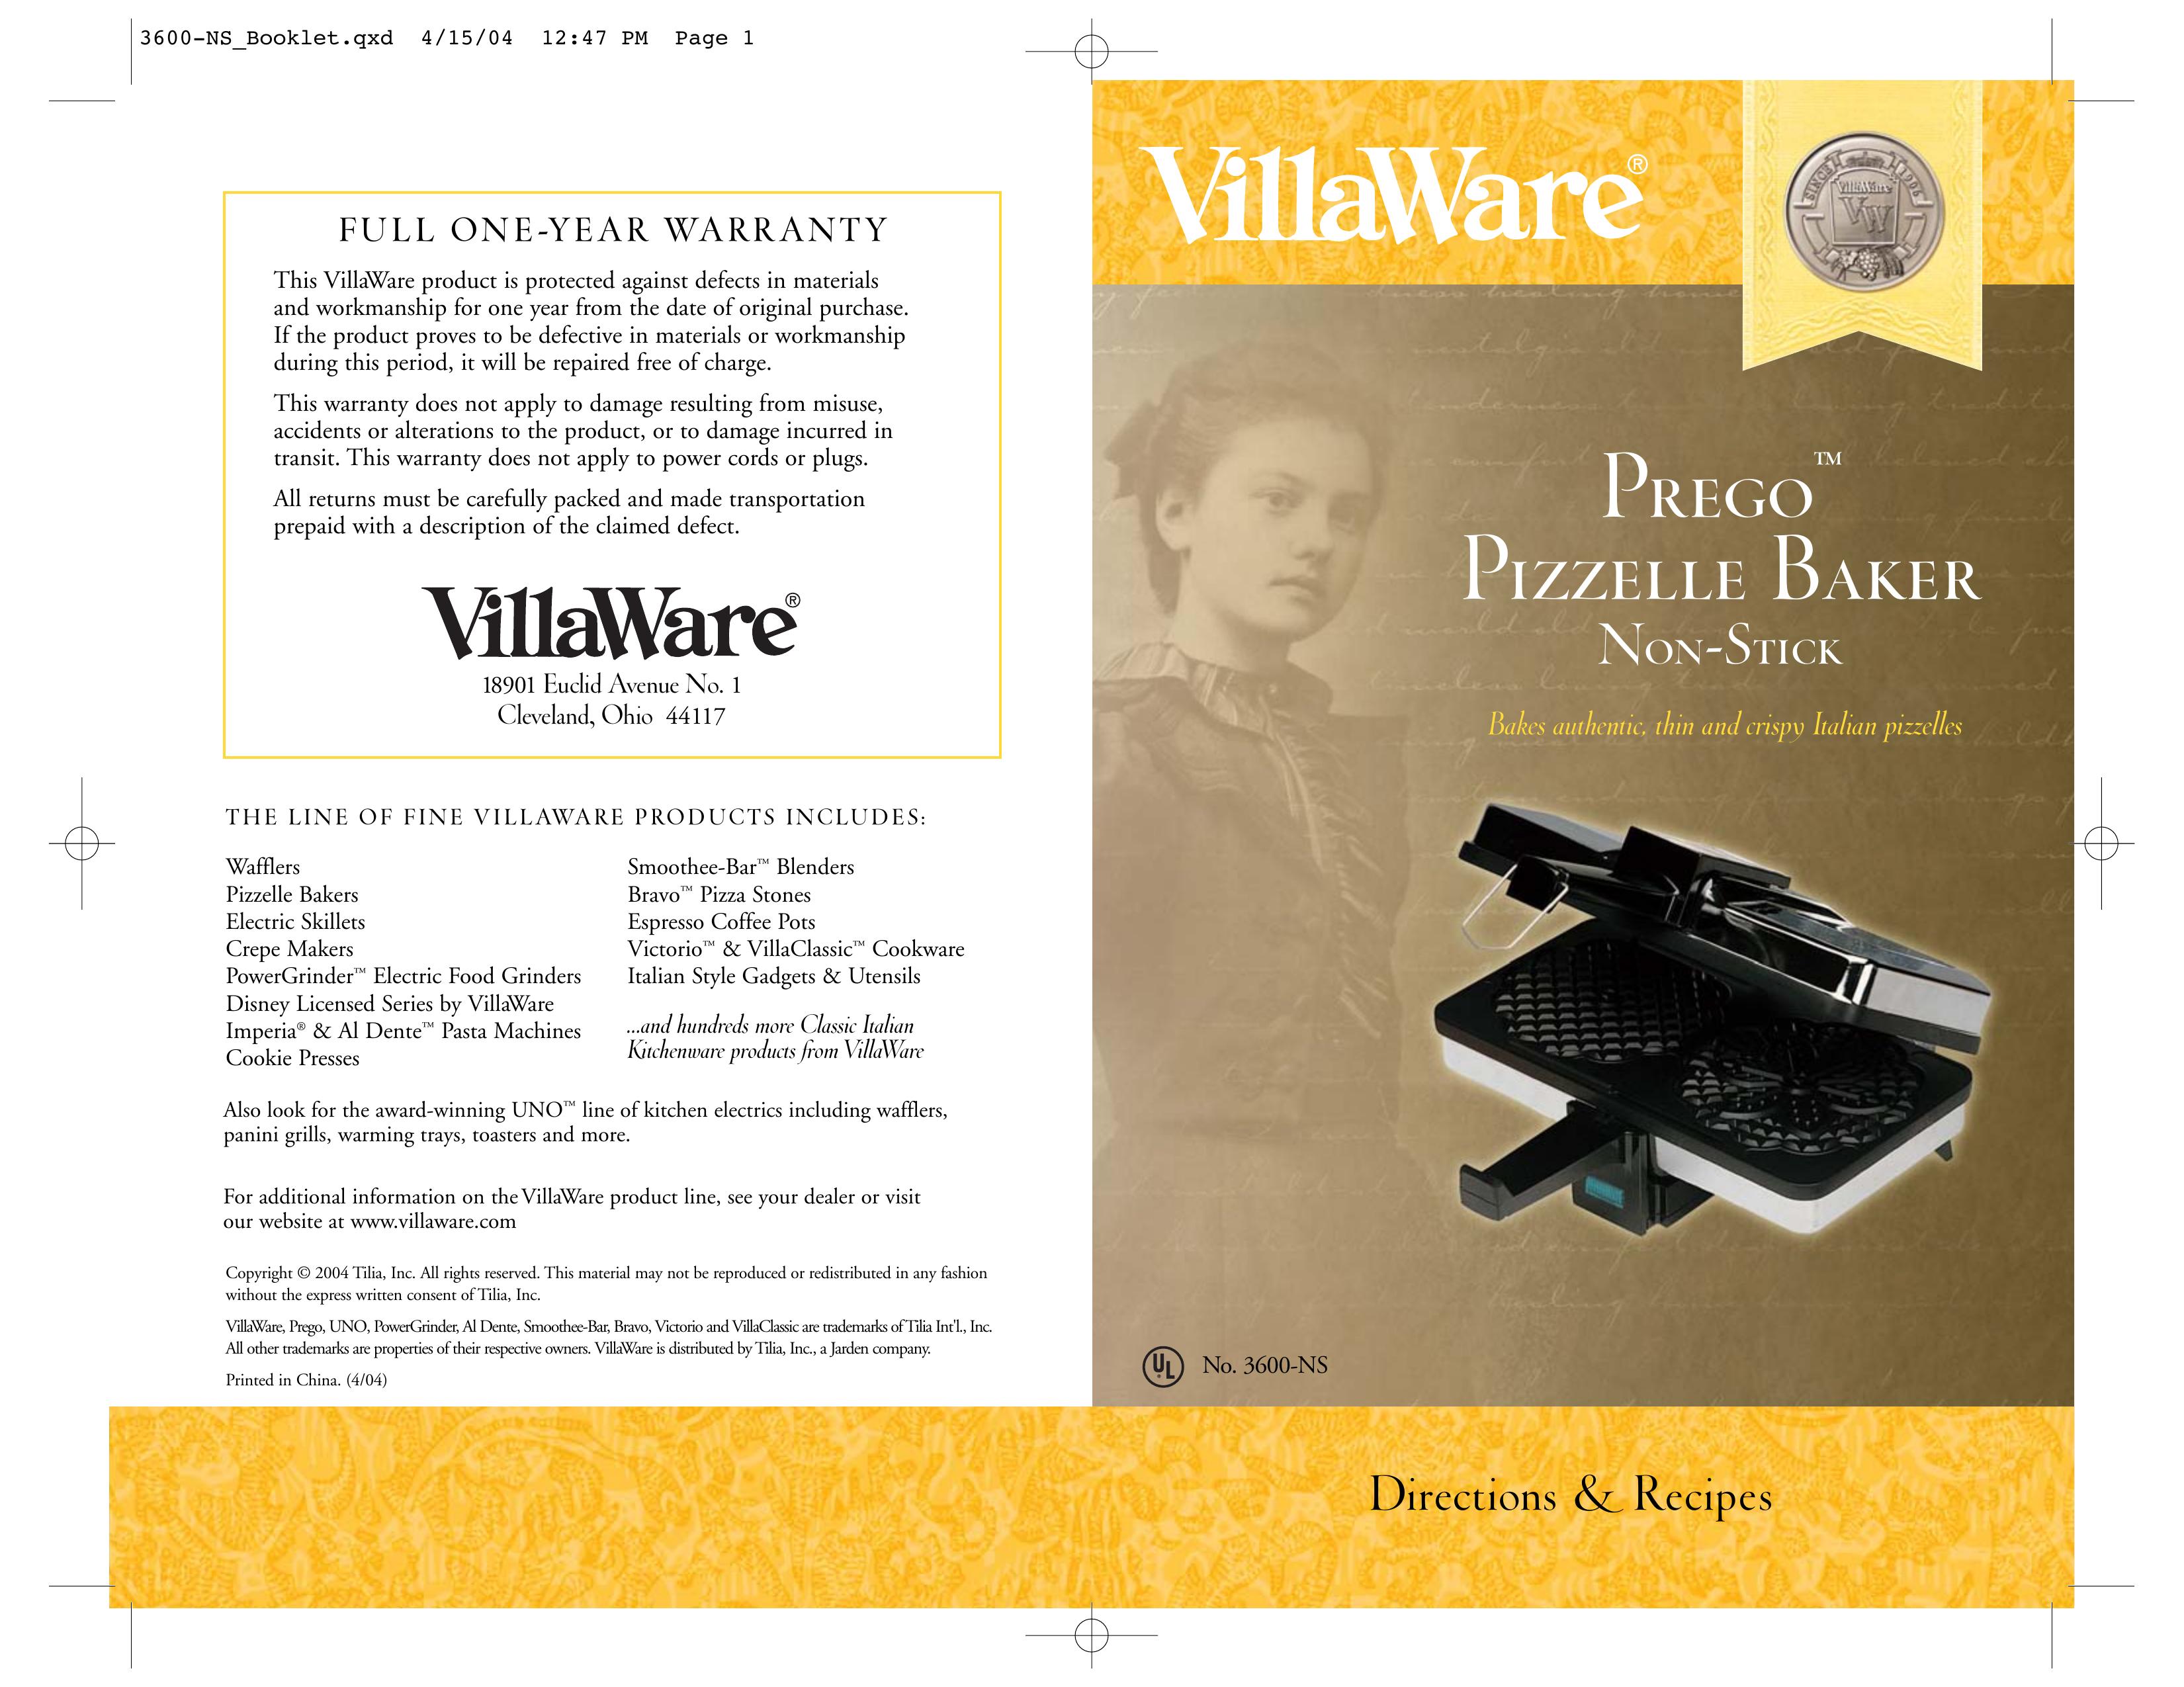 Villaware 3600-NS Waffle Iron User Manual